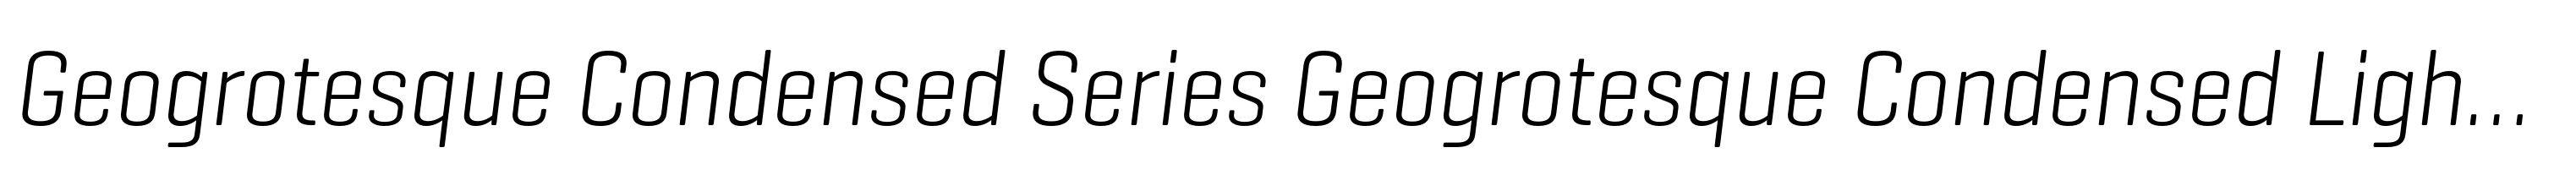 Geogrotesque Condensed Series Geogrotesque Condensed Light Italic